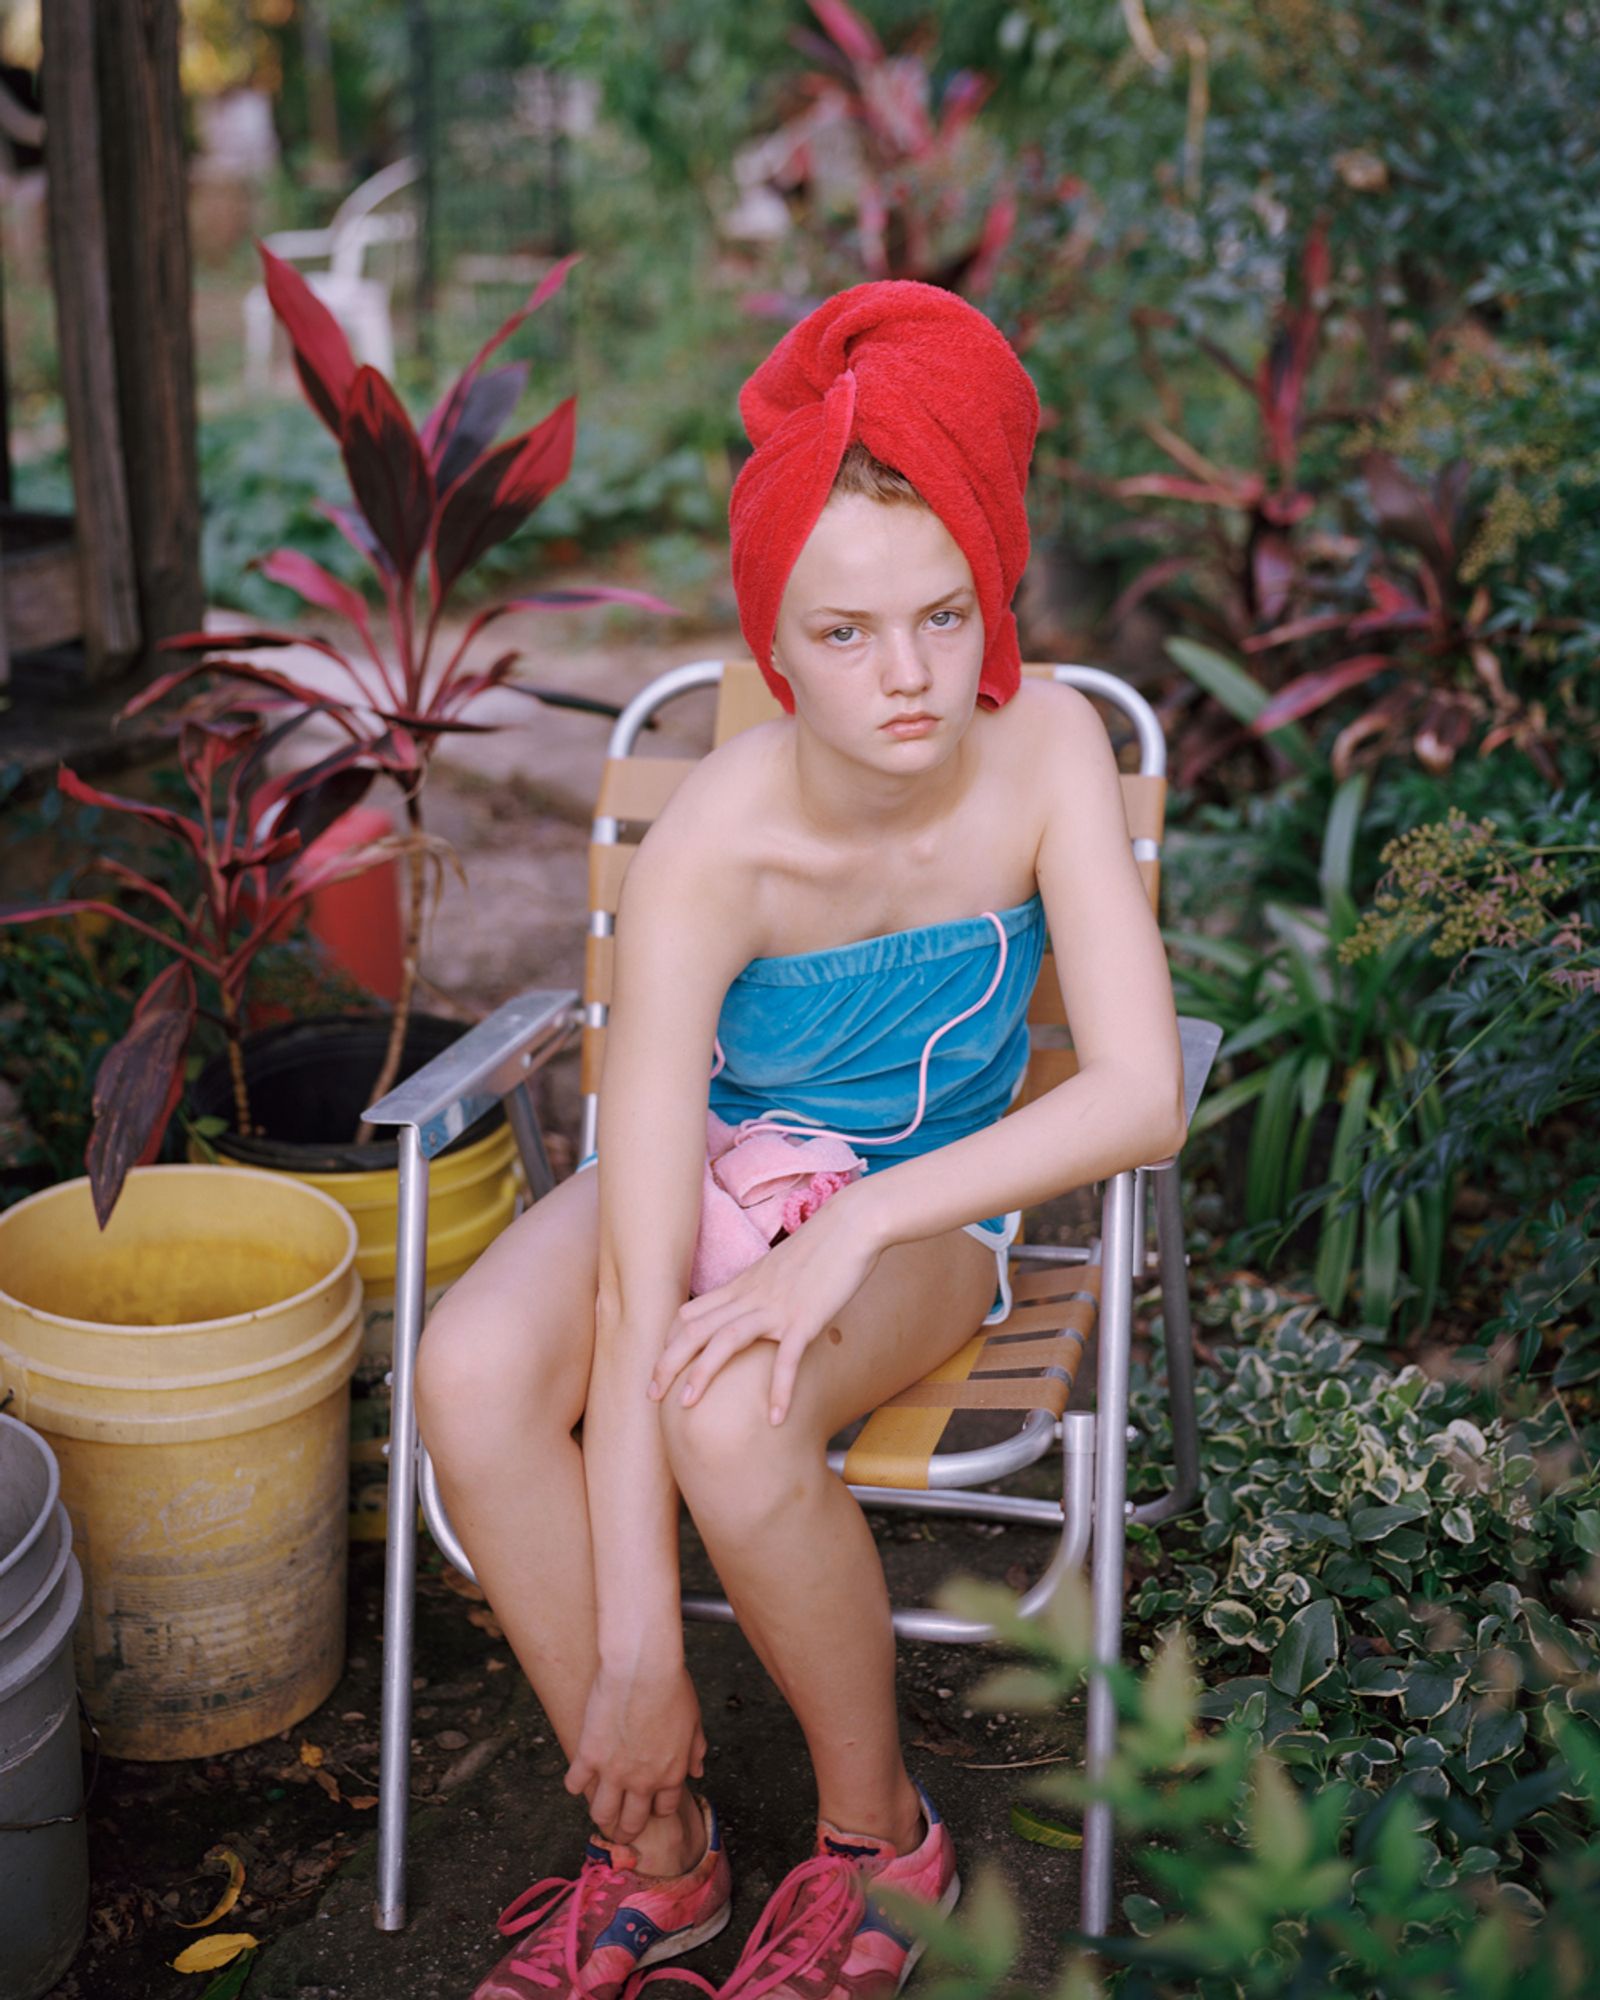 © Susan Worsham - "Georgia with Red Towel"